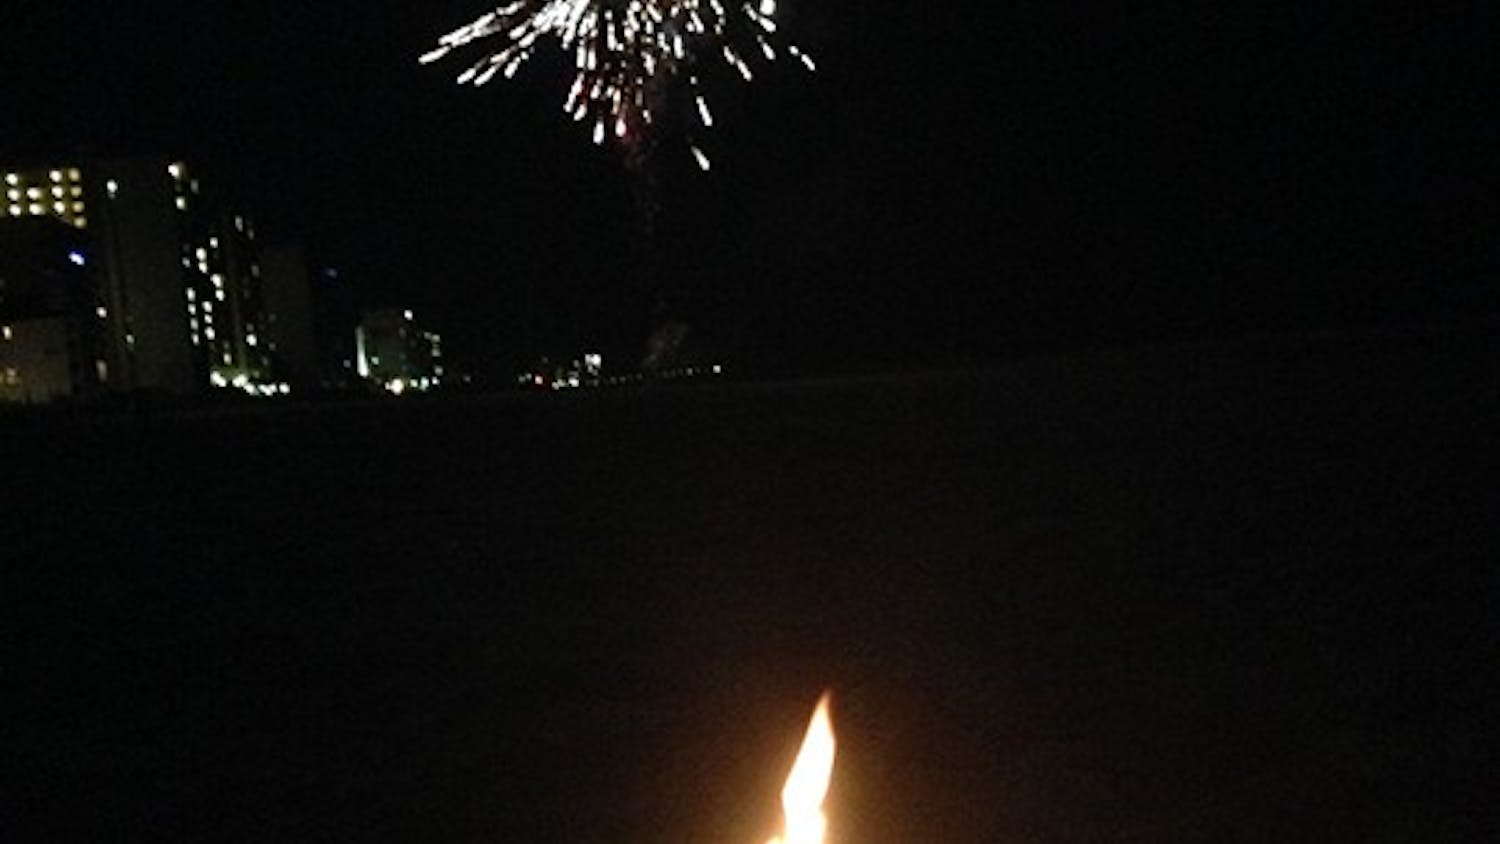 Myrtle Beach, South Carolina on New Year's Eve